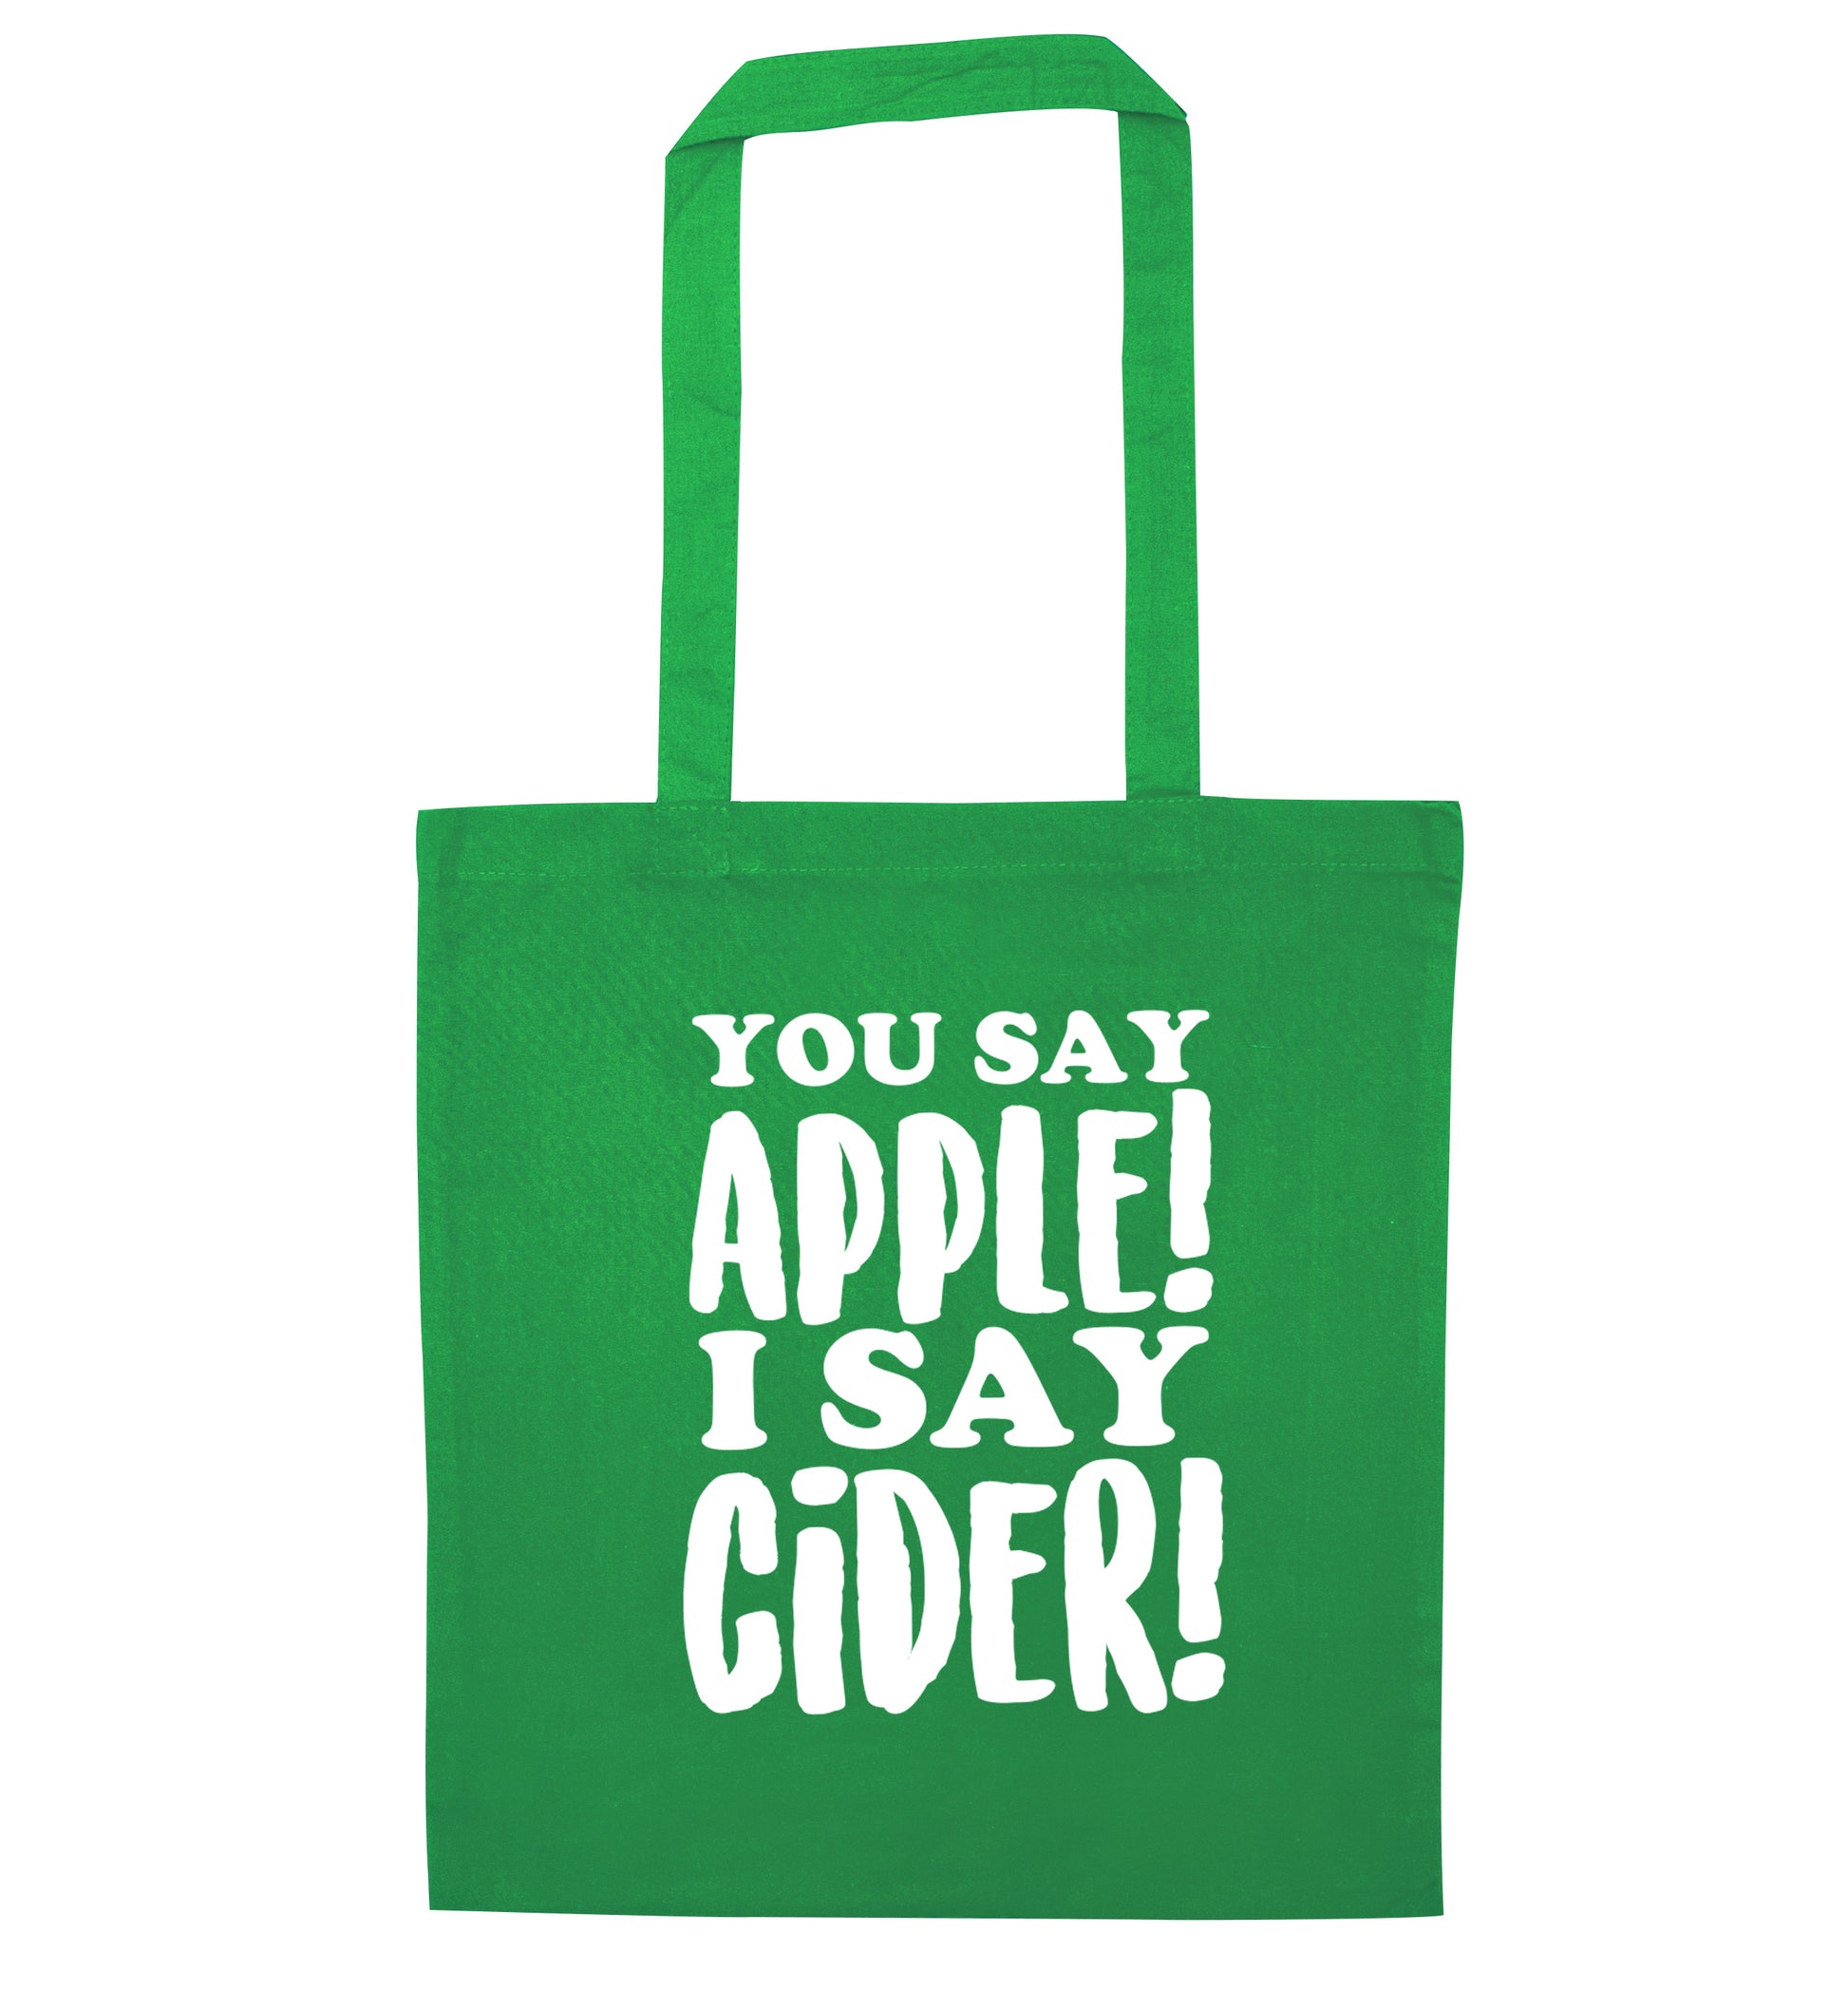 You say apple I say cider! green tote bag